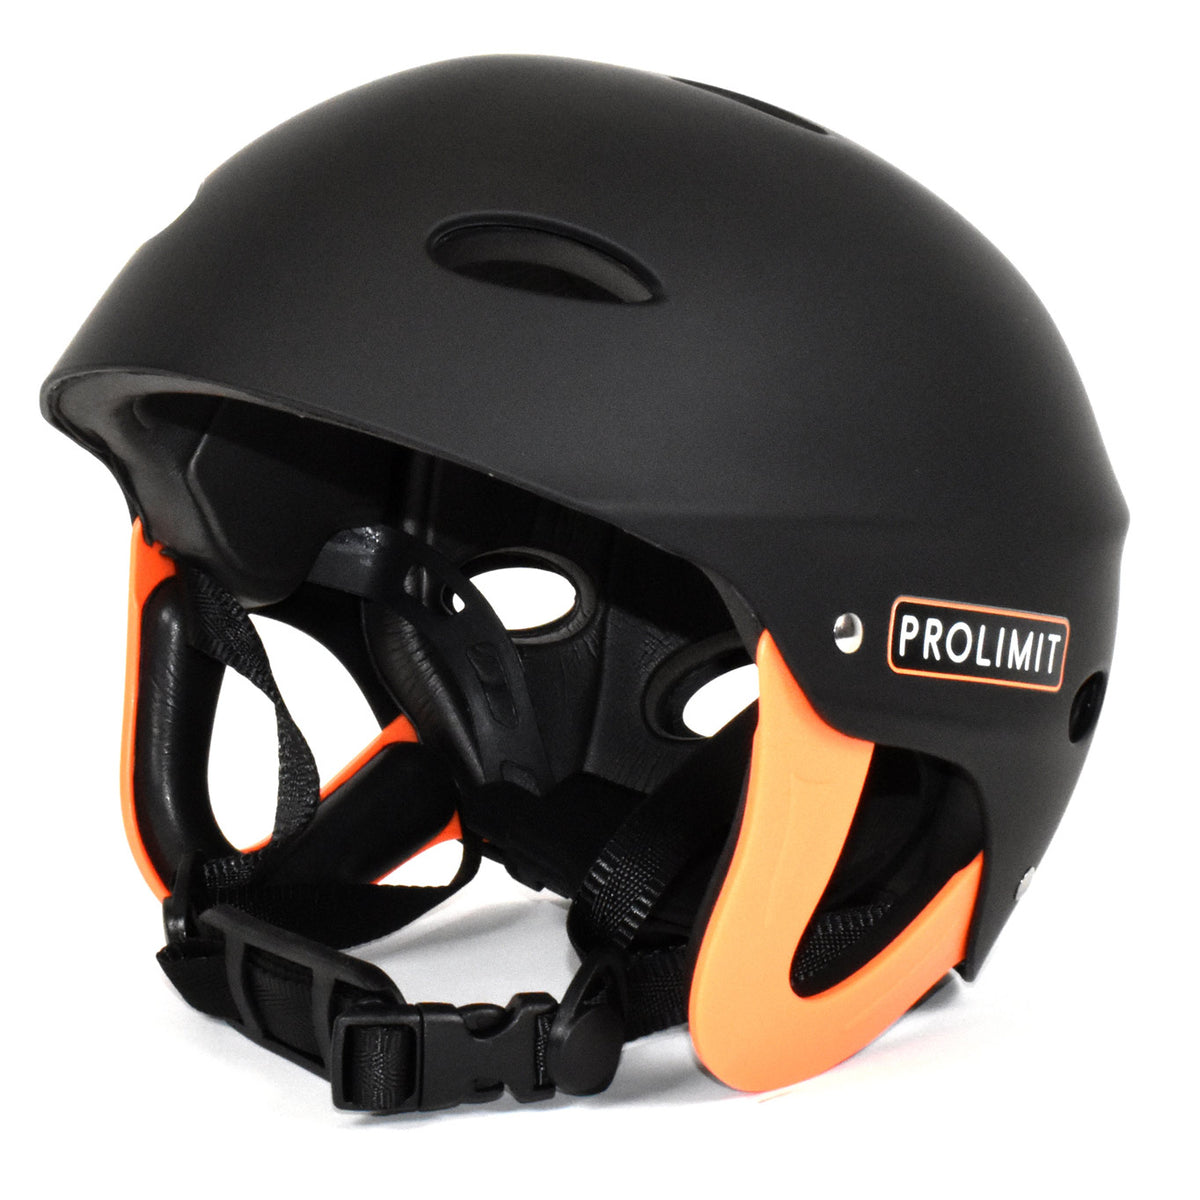 PROLIMIT WATERSPORT HELMET BLACK/ORANGE water sports helmet